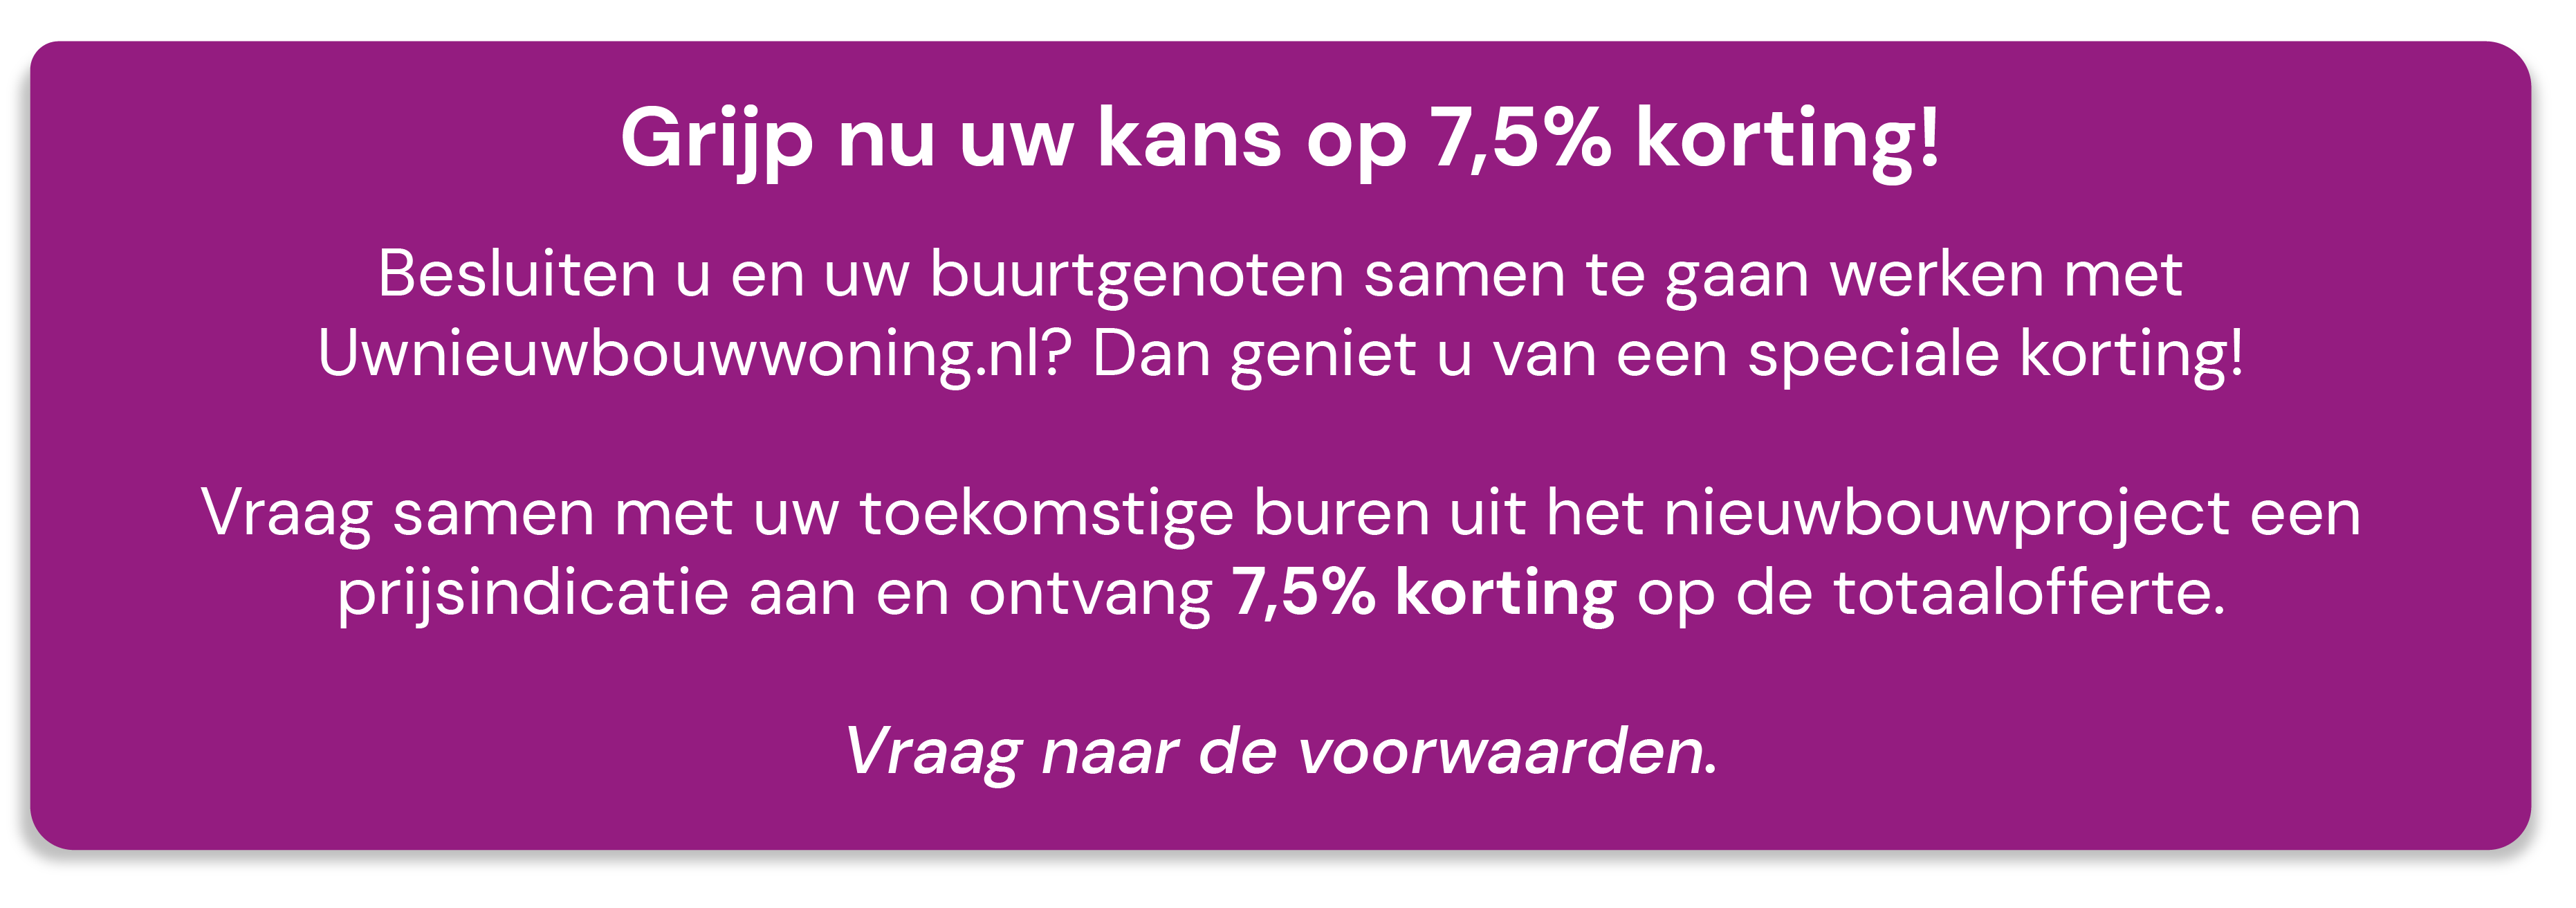 Burenvoordeel tabel uwnieuwbouwwoning.nl